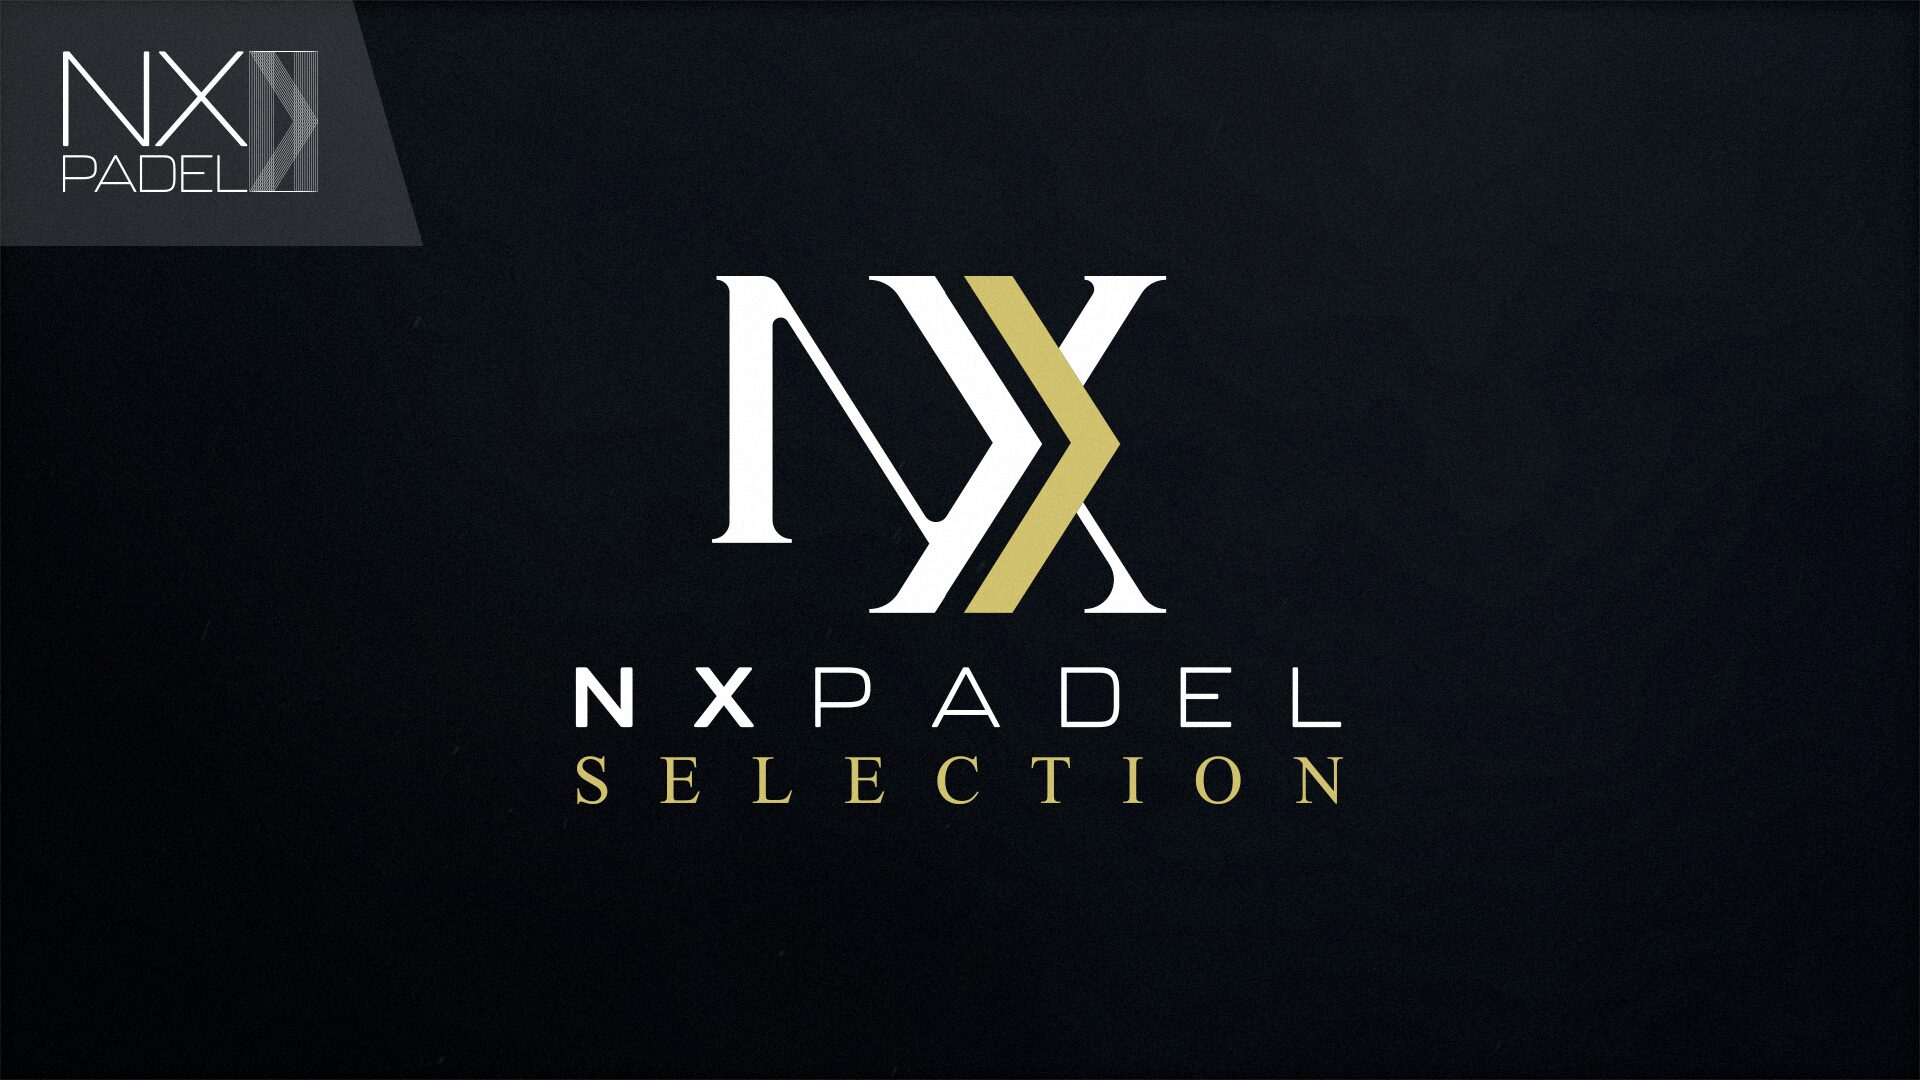 NXPADEL SELECTION